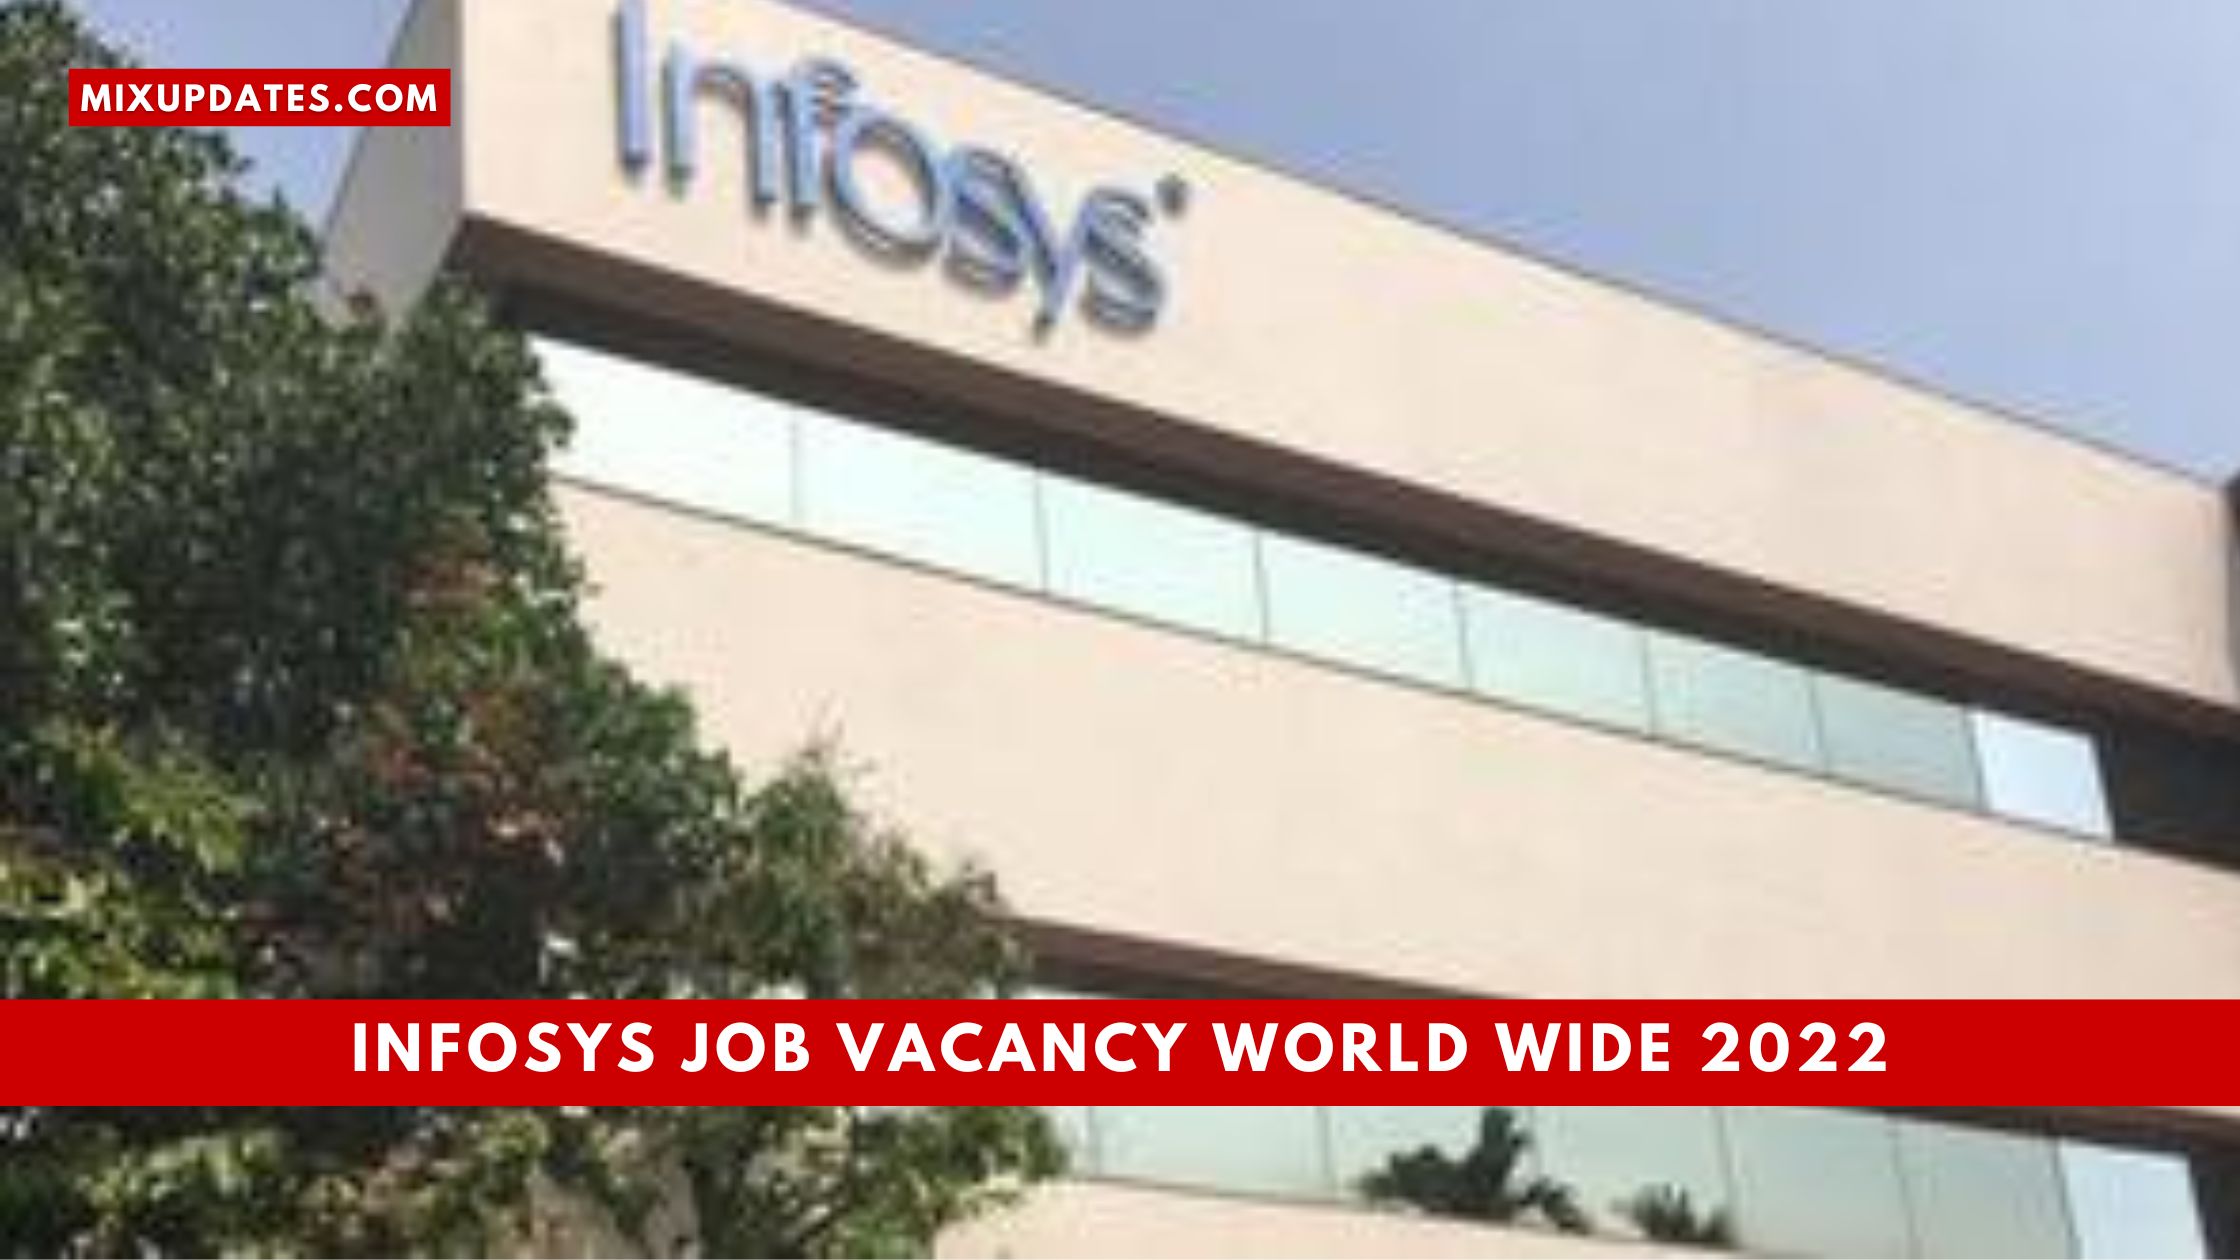 Infosys Job Vacancy World Wide 2022